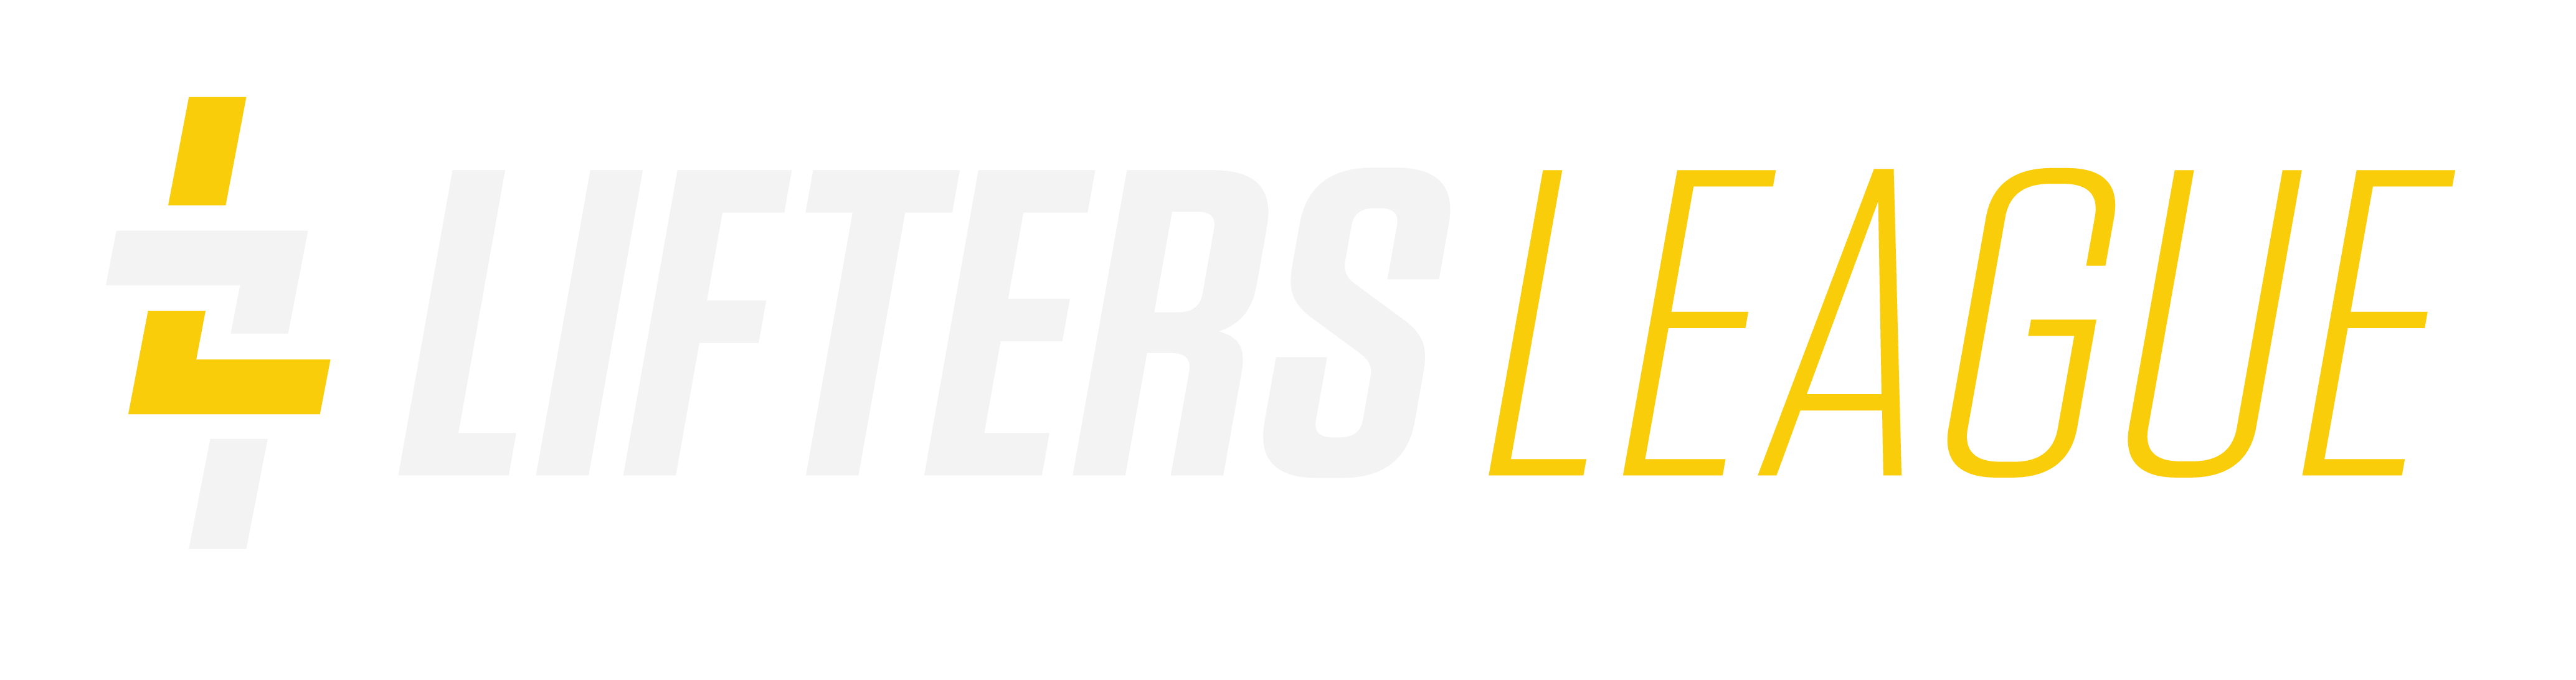 Lifters League Logo Rev